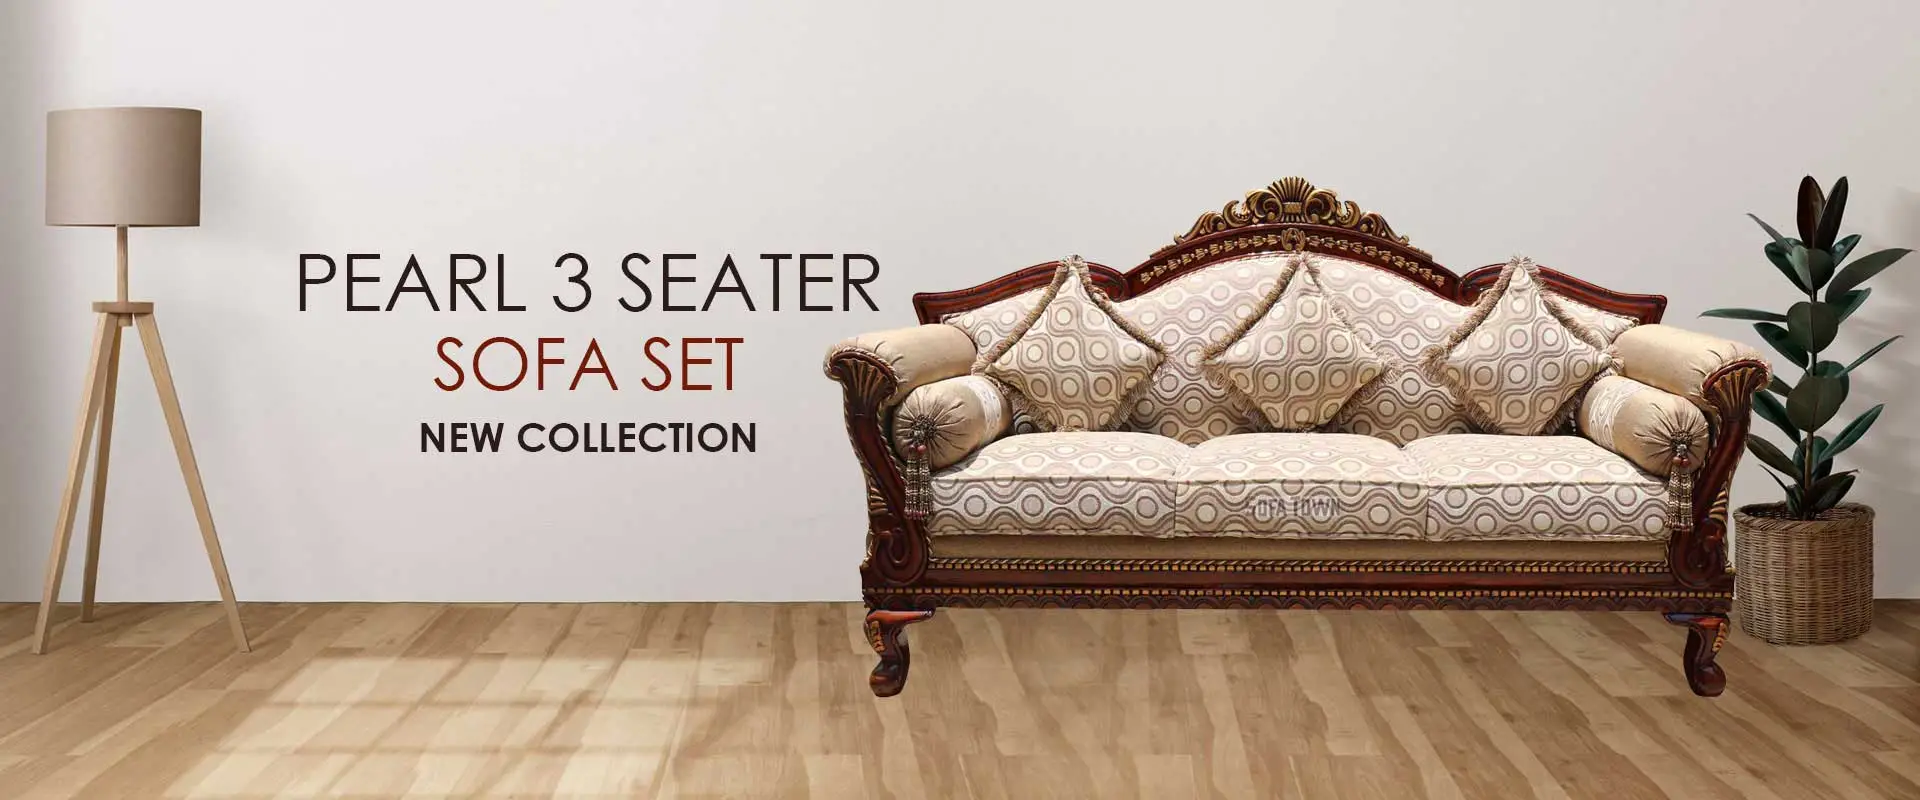 Pearl 3 Seater Sofa Set  Manufacturers in Fatehpur